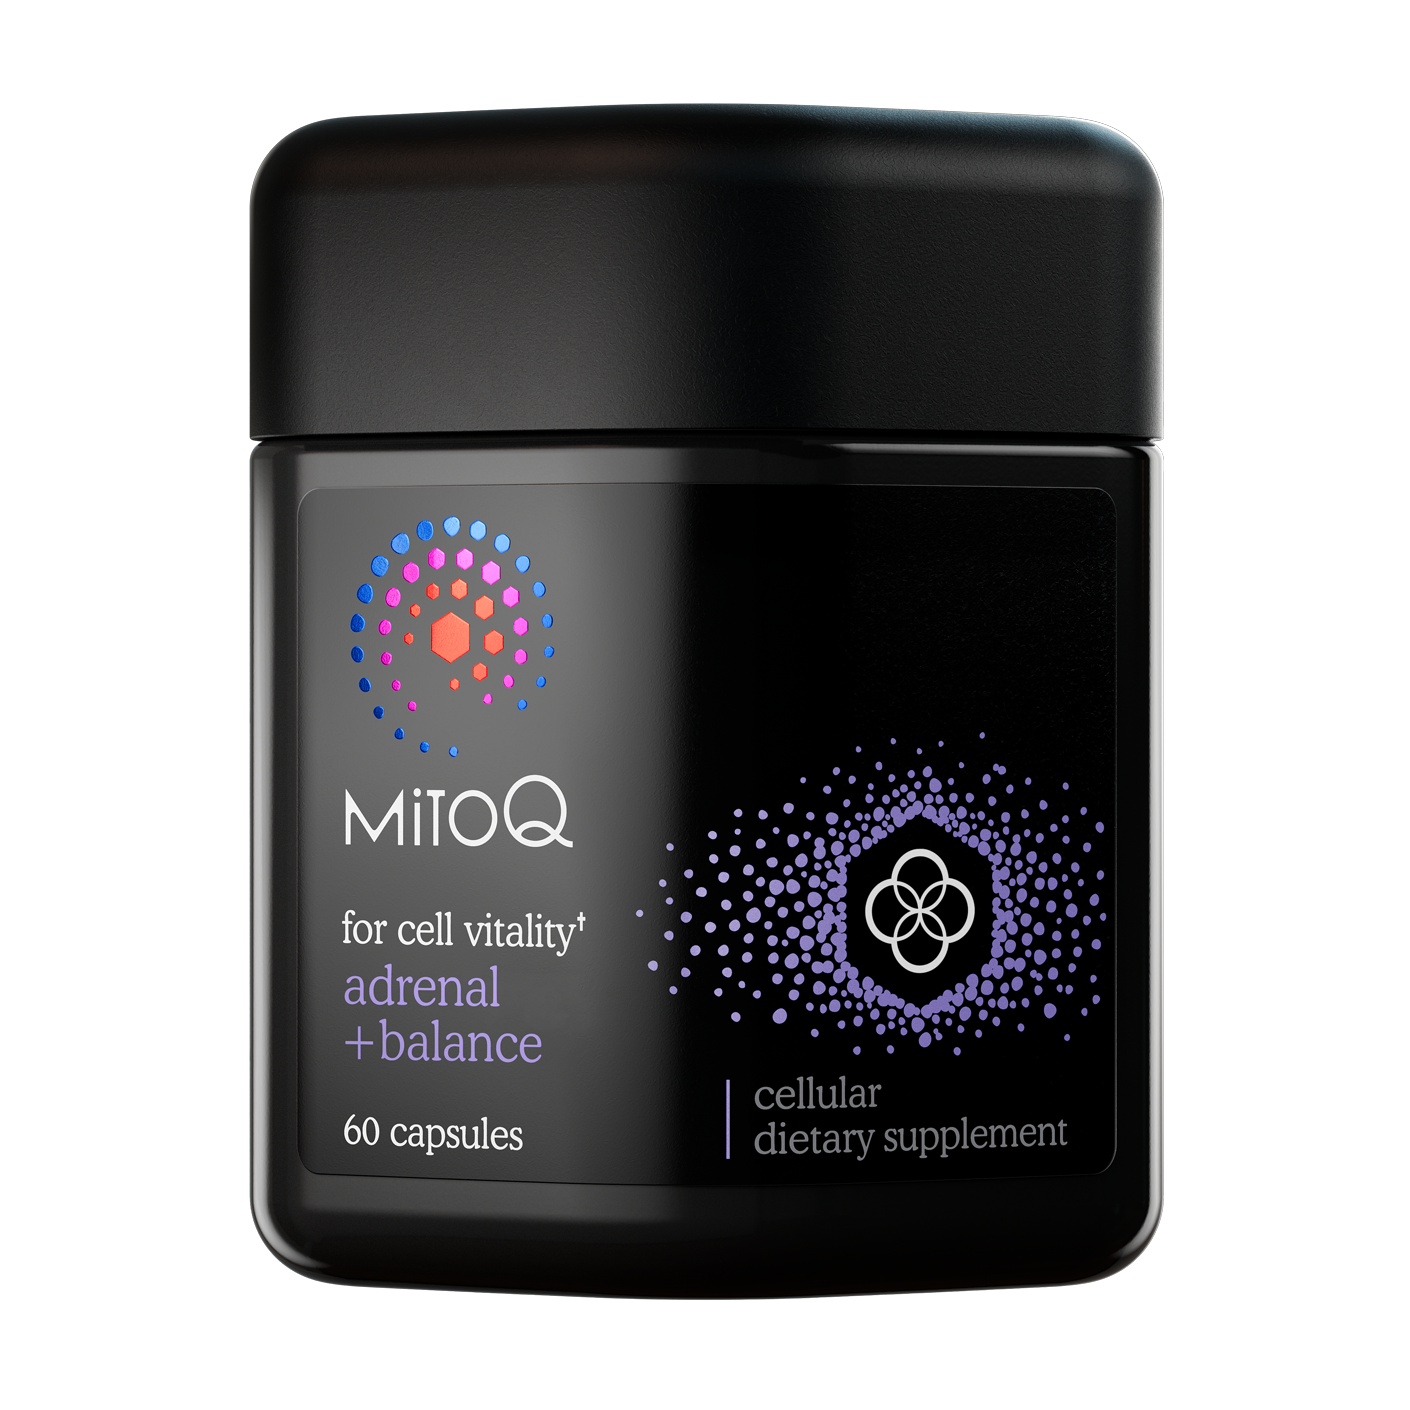 MitoQ adrenal +balance bottle